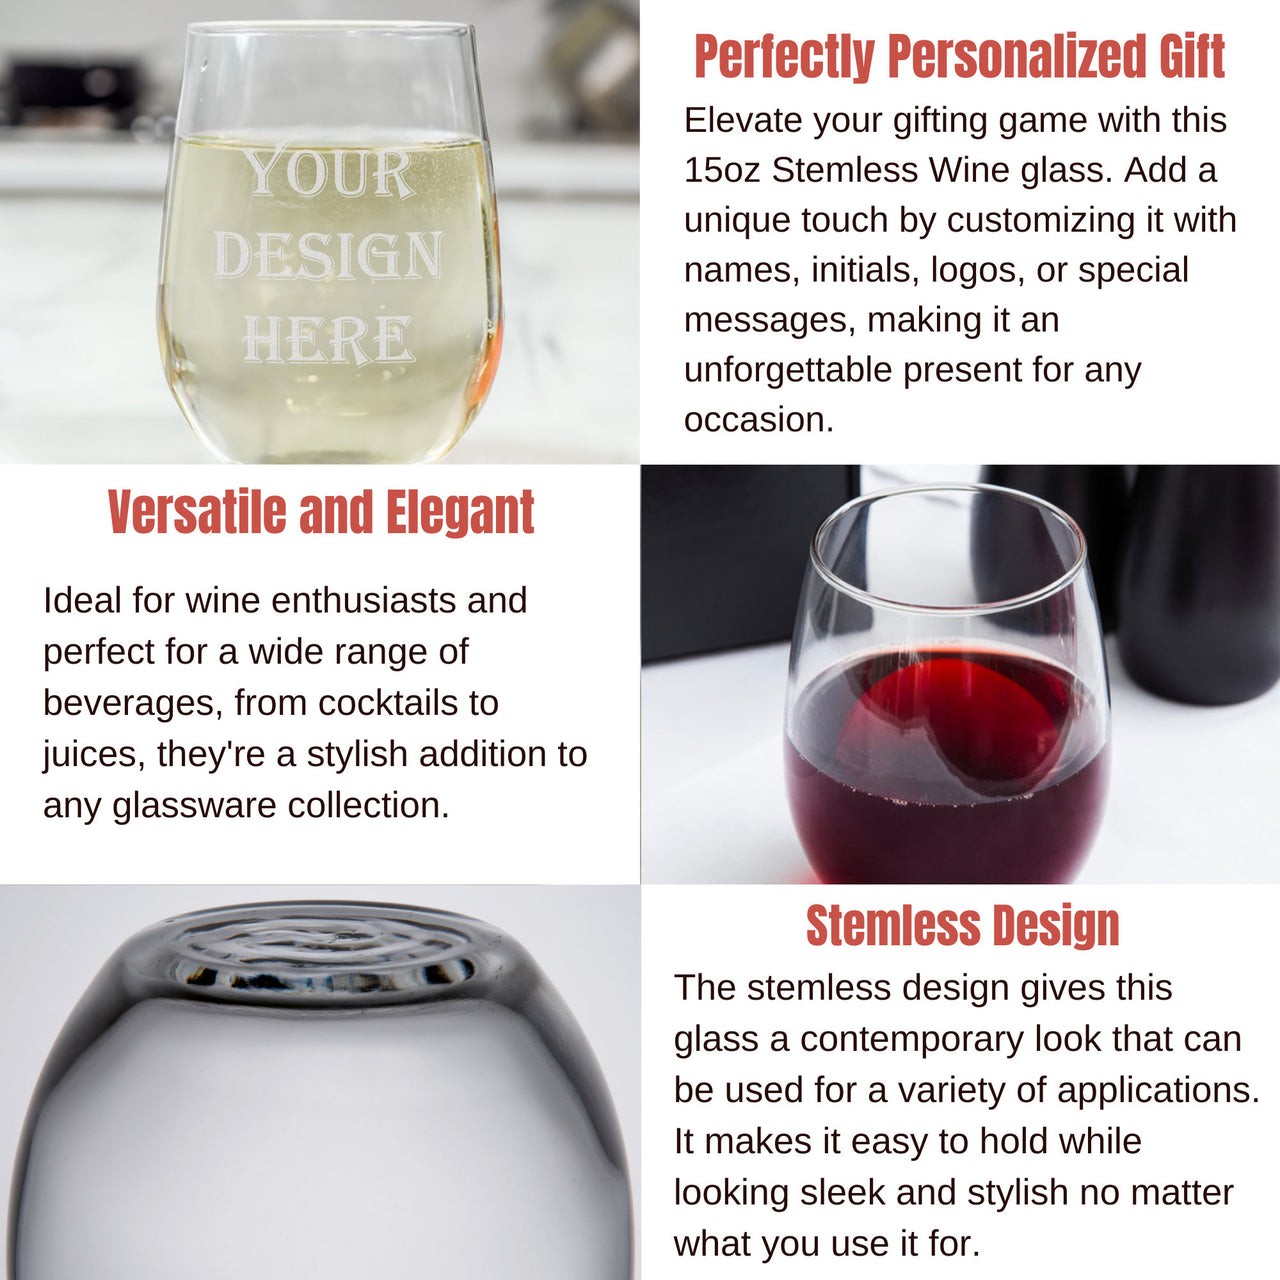 Your Design 15oz Stemless Wine Glass